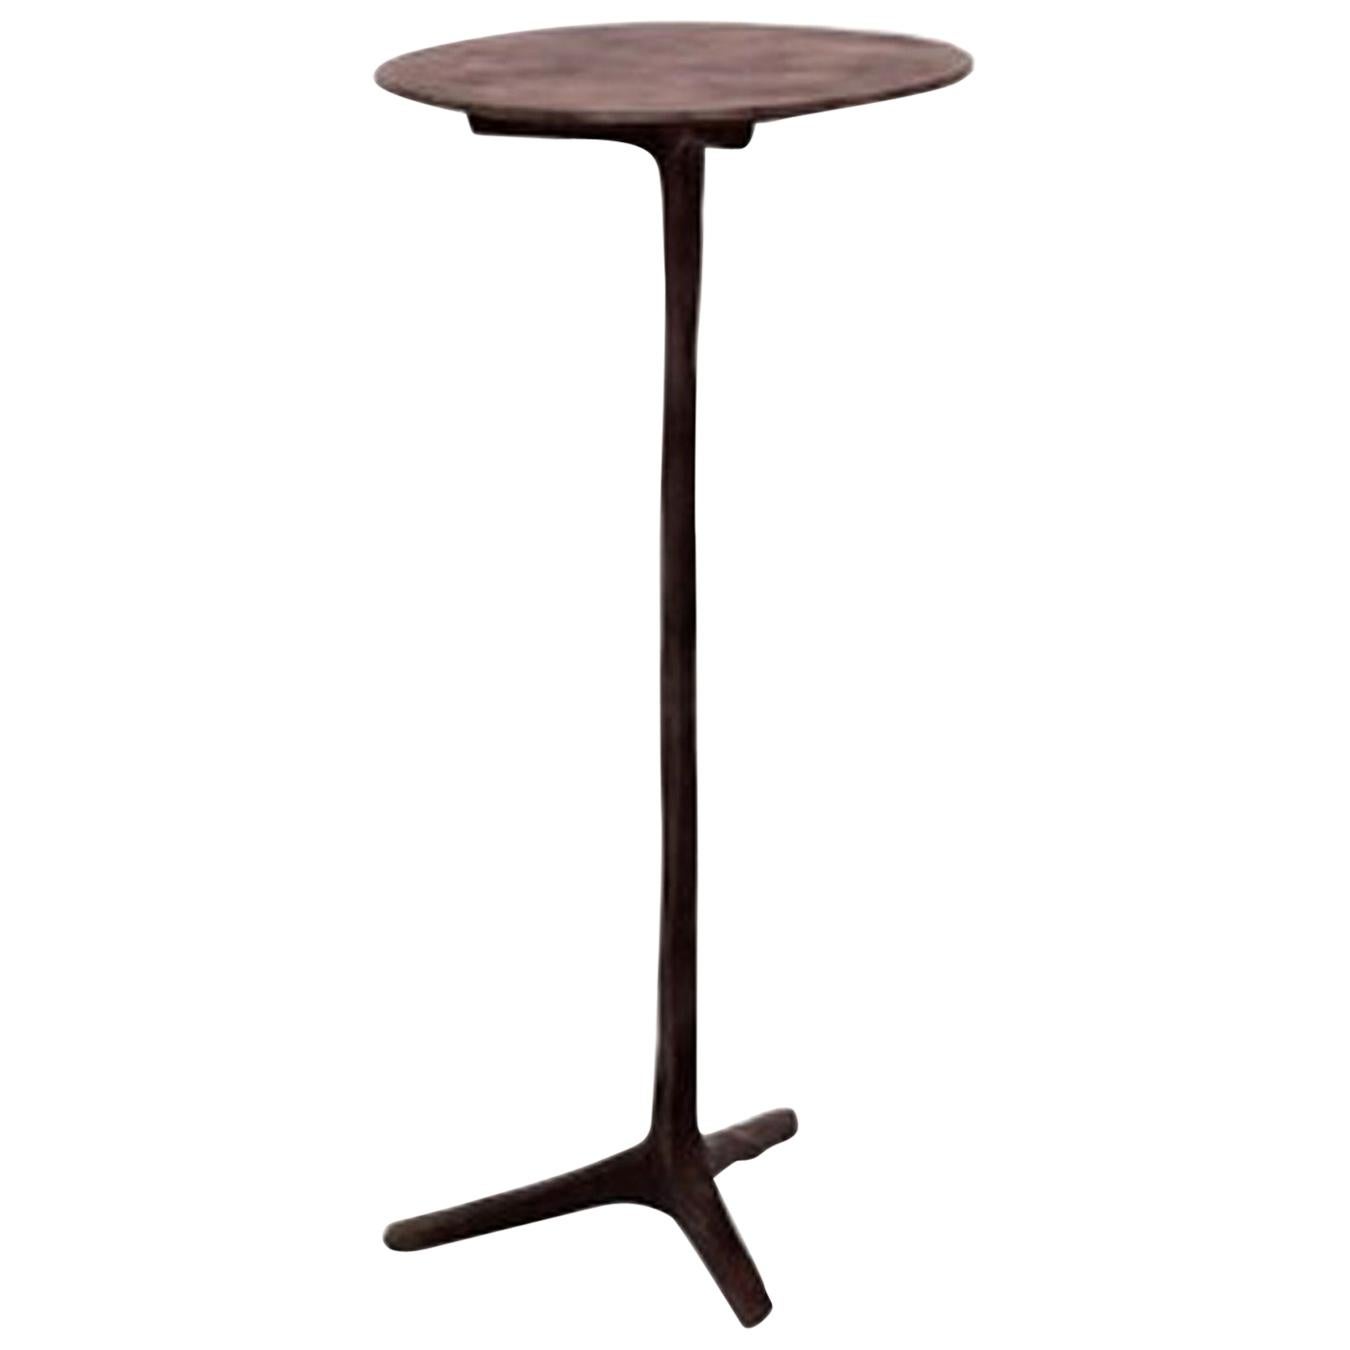 Piet Boon Klink side table in Light Bronze For Sale